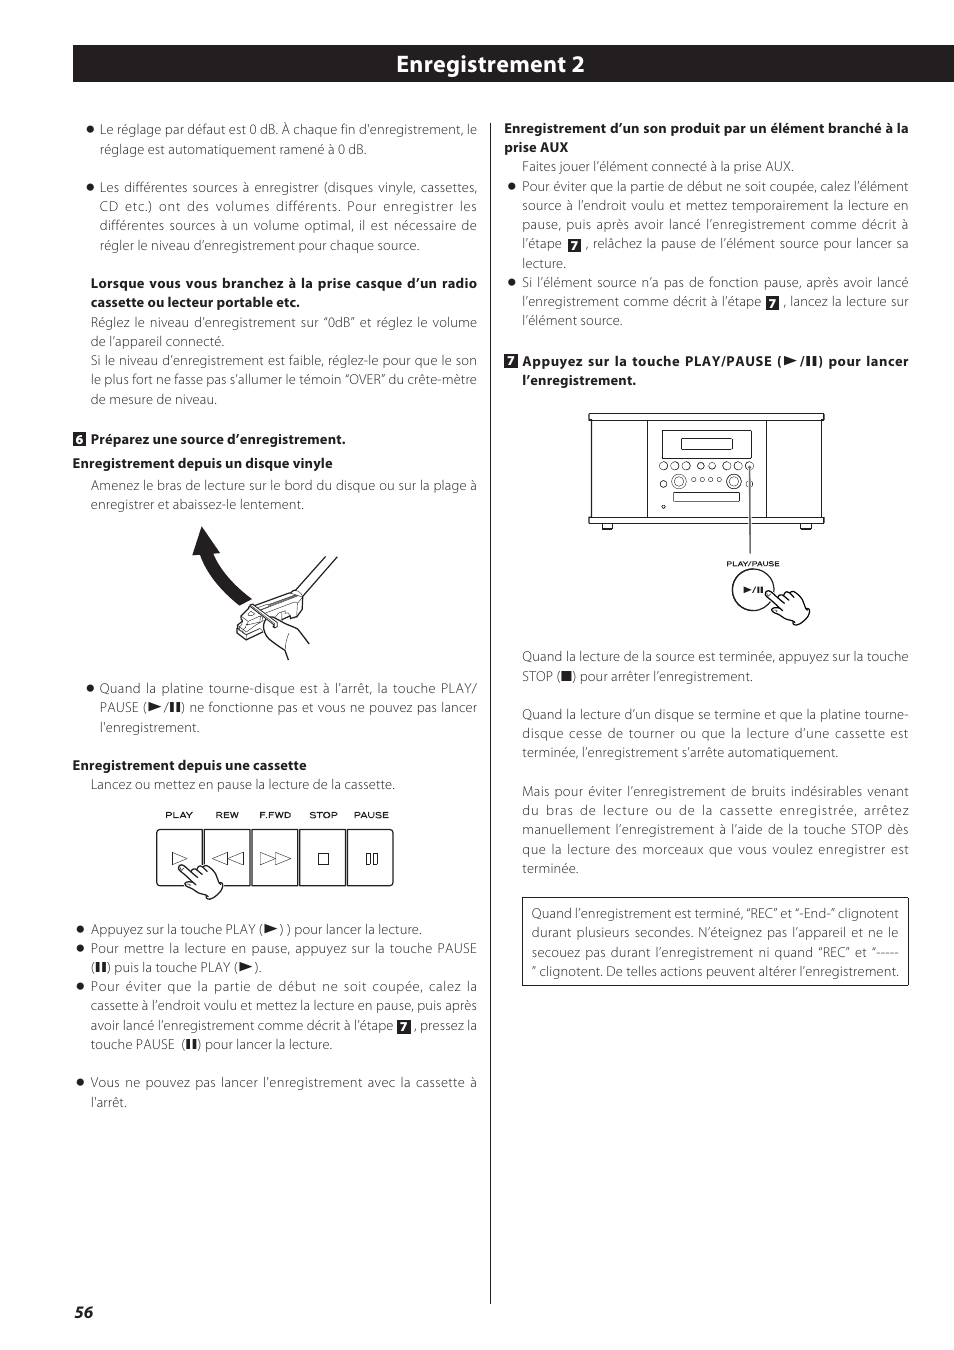 Enregistrement 2 | Teac GF-550 User Manual | Page 56 / 96